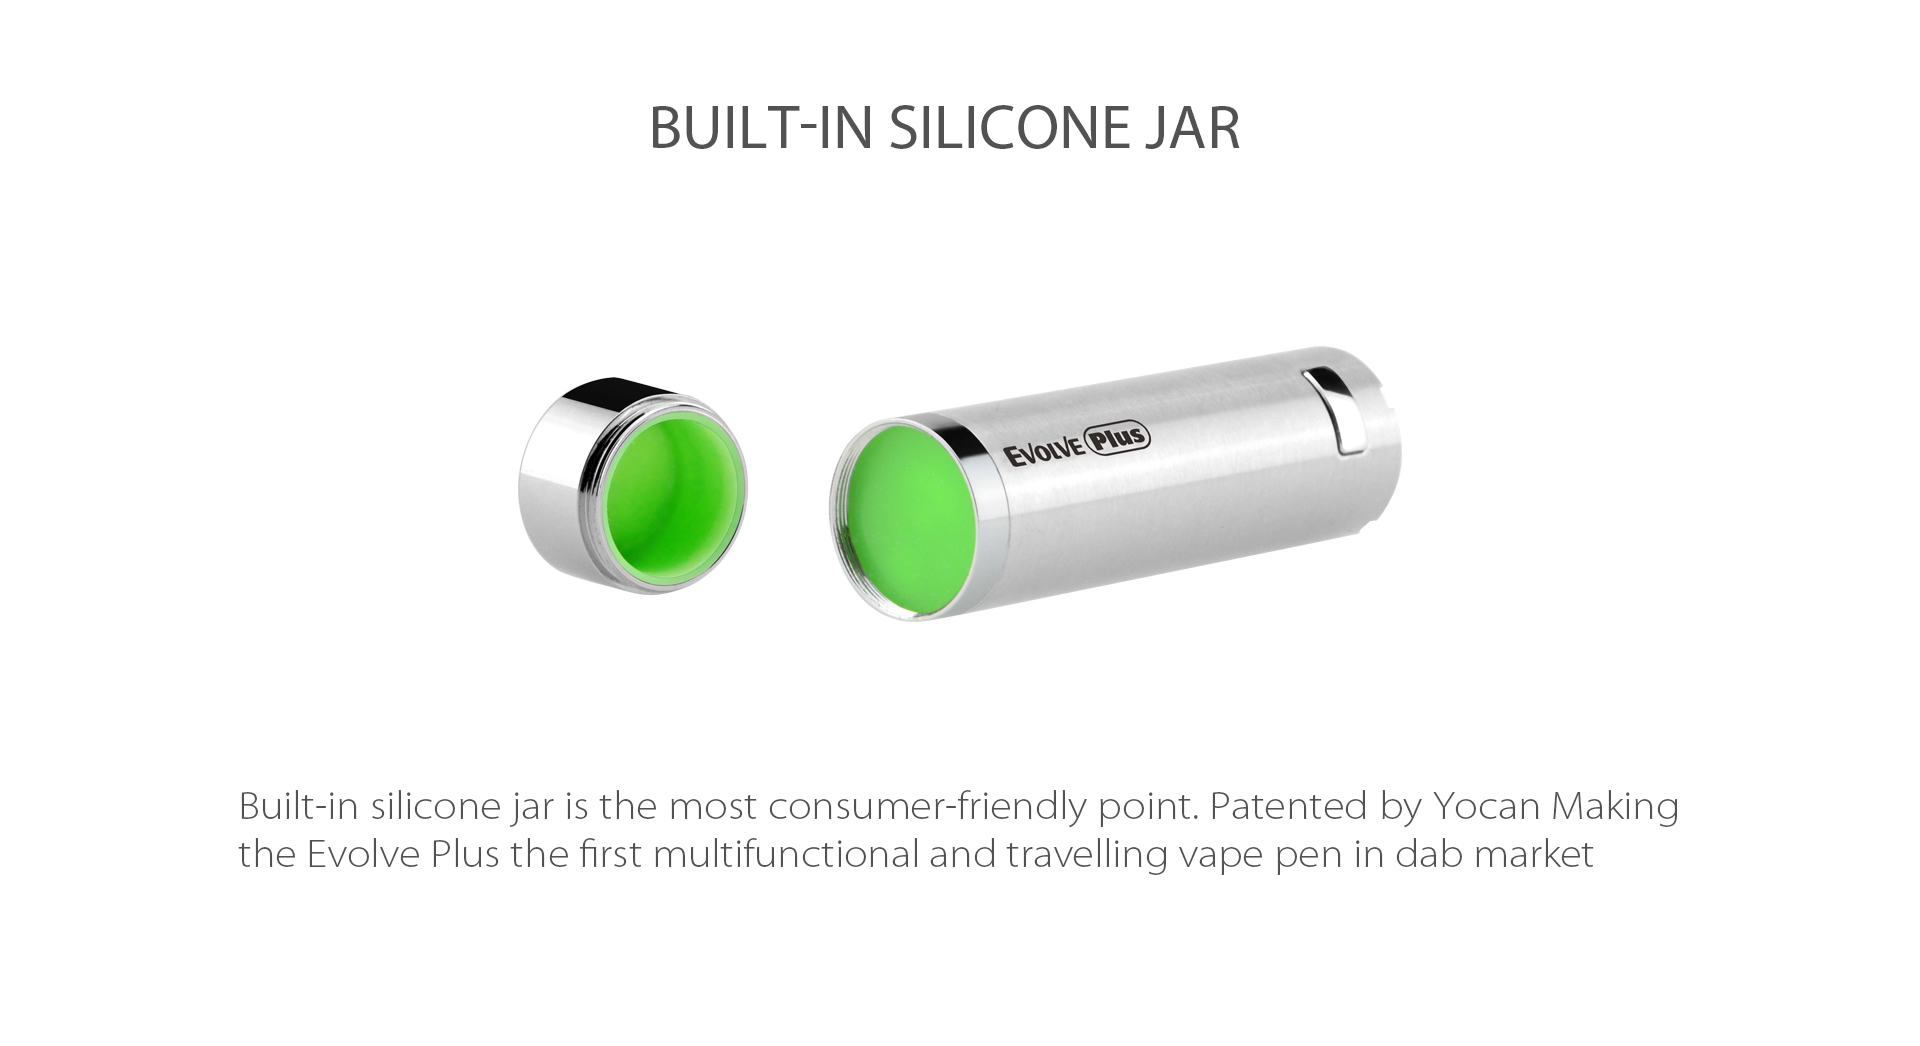 Yocan Evolve-Plus vaporizer pen 2020 version features built-in silicone jar.